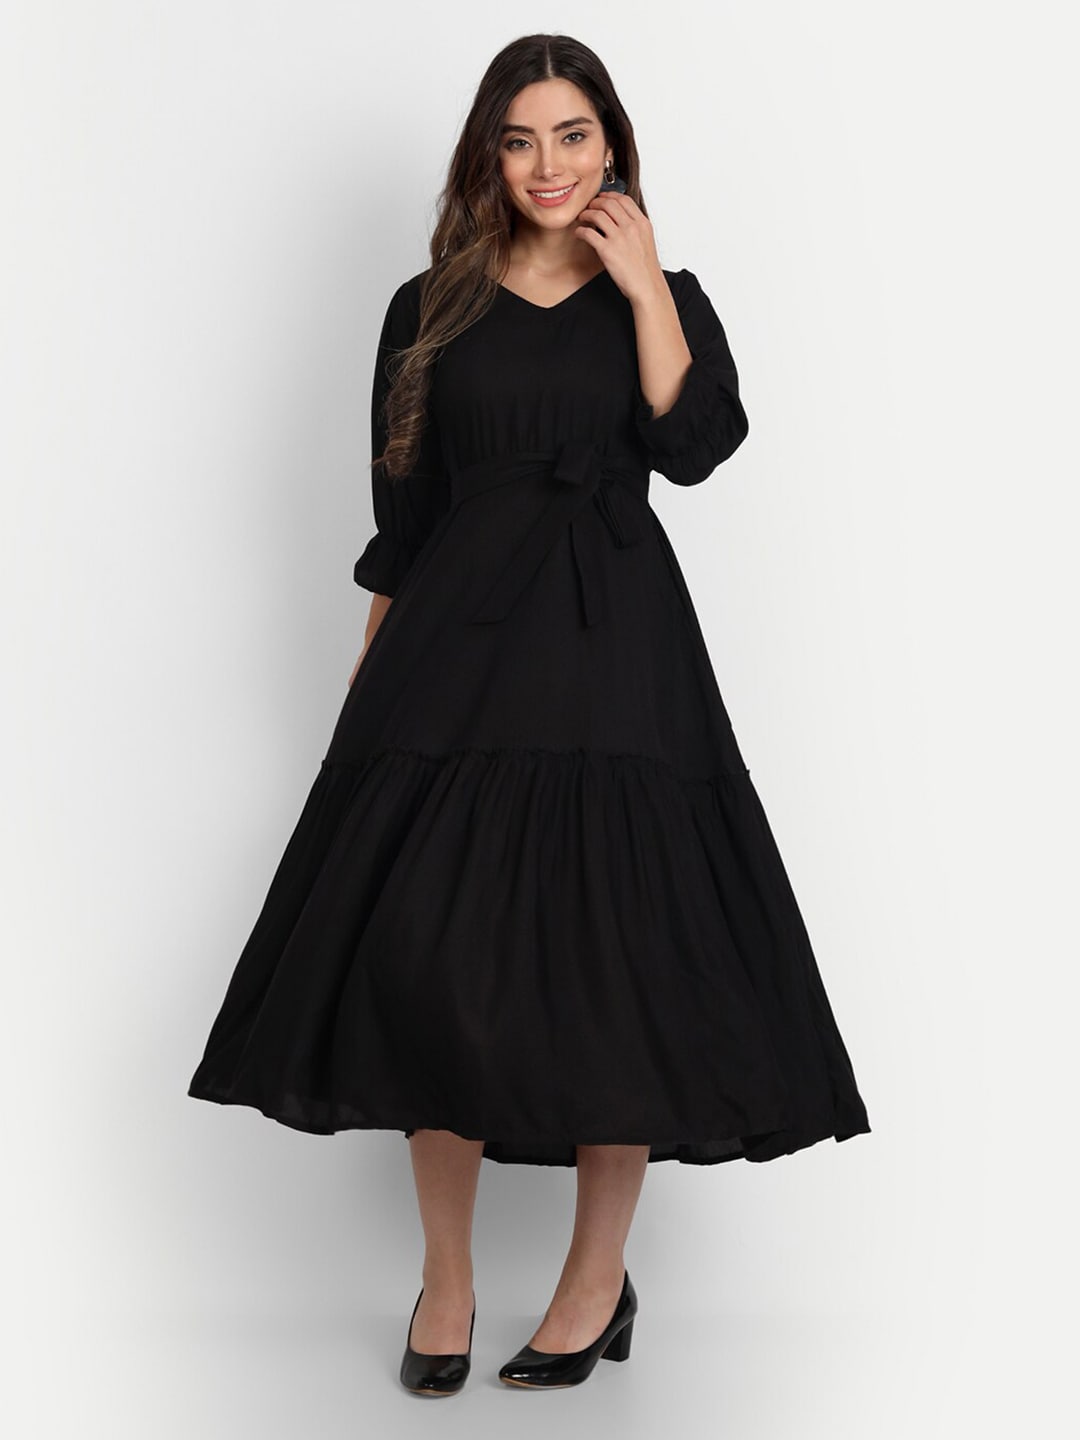 GUFRINA Black A-Line Midi Dress Price in India